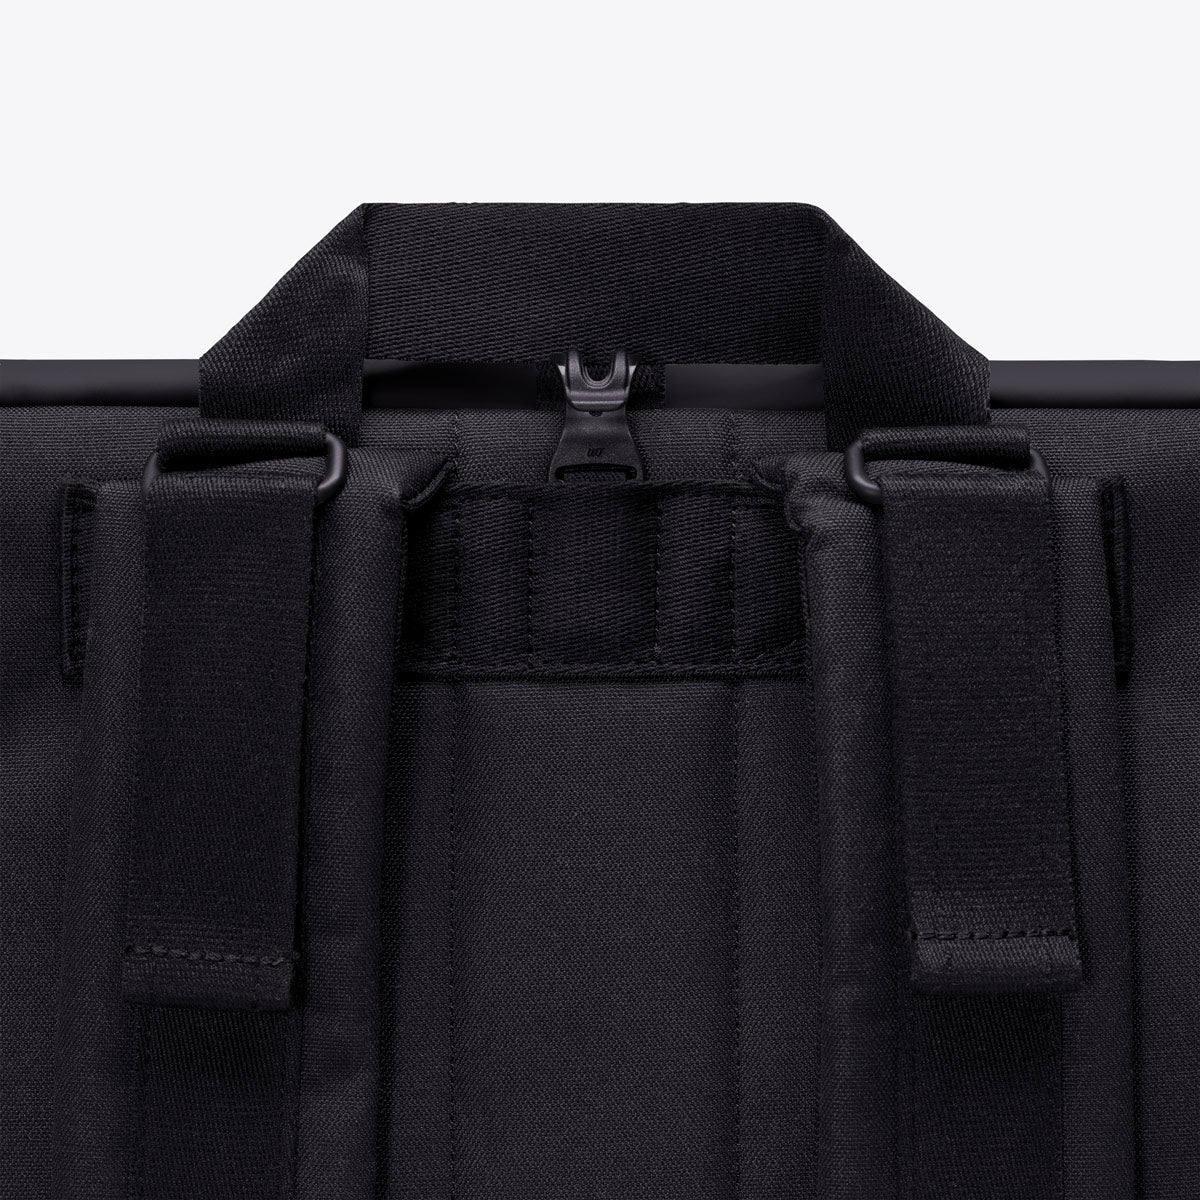 Ucon Acrobatics // Jannik Medium Pannier Backpack // Black